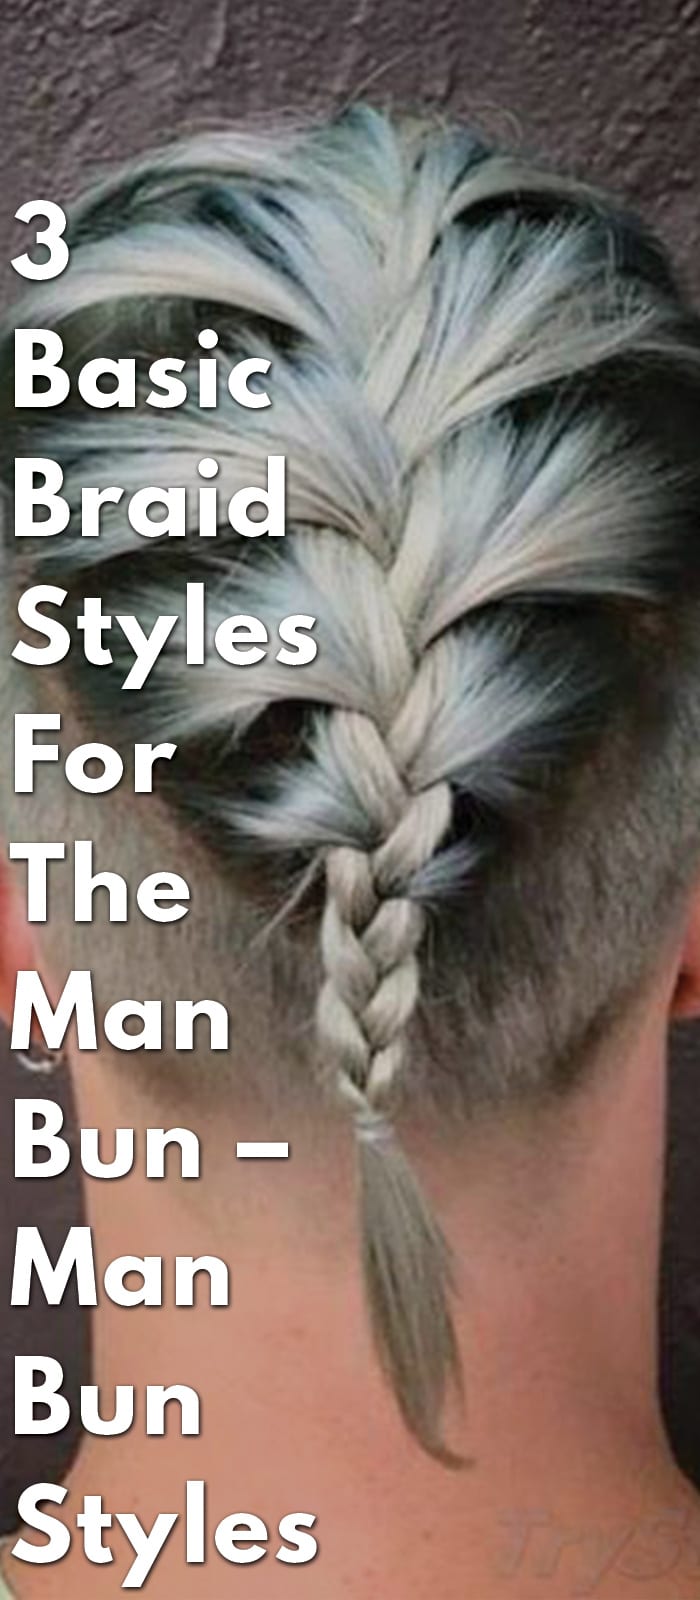 3-Basic-Braid-Styles-For-The-Man-Bun-–-Man-Bun-Styles